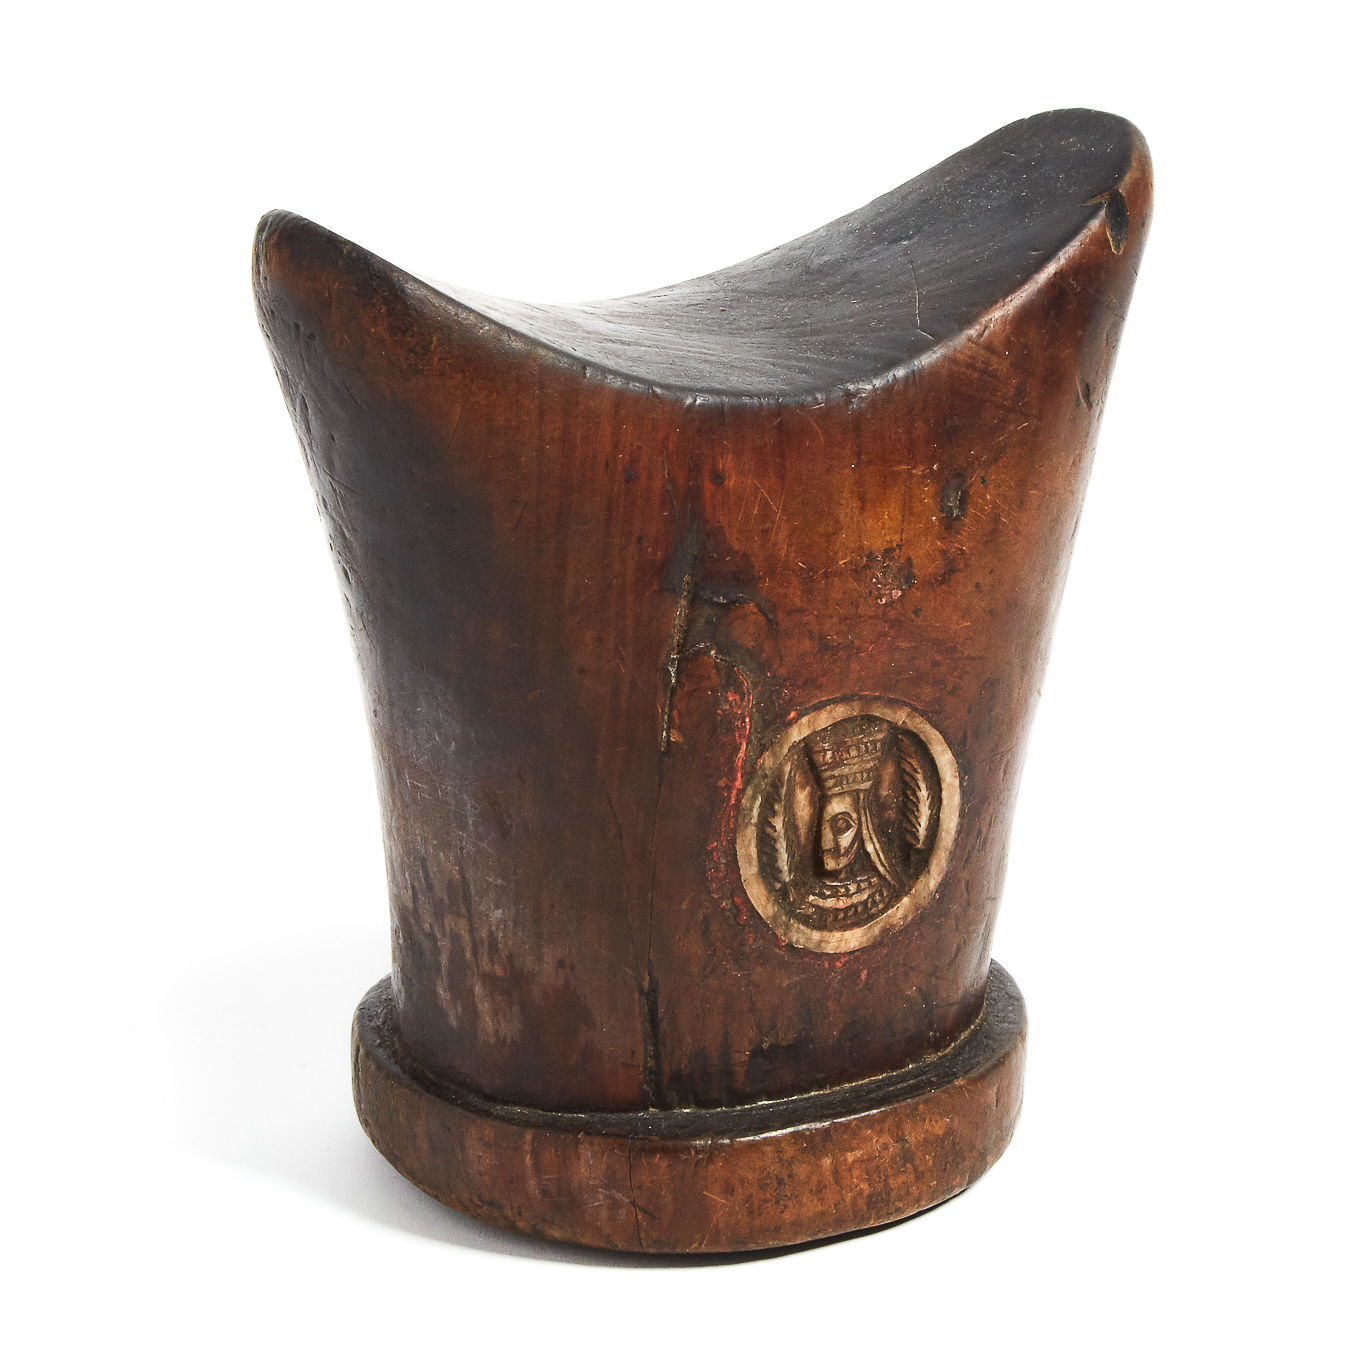 Gurage Carved Wood Headrest, Ethiopia, East Africa